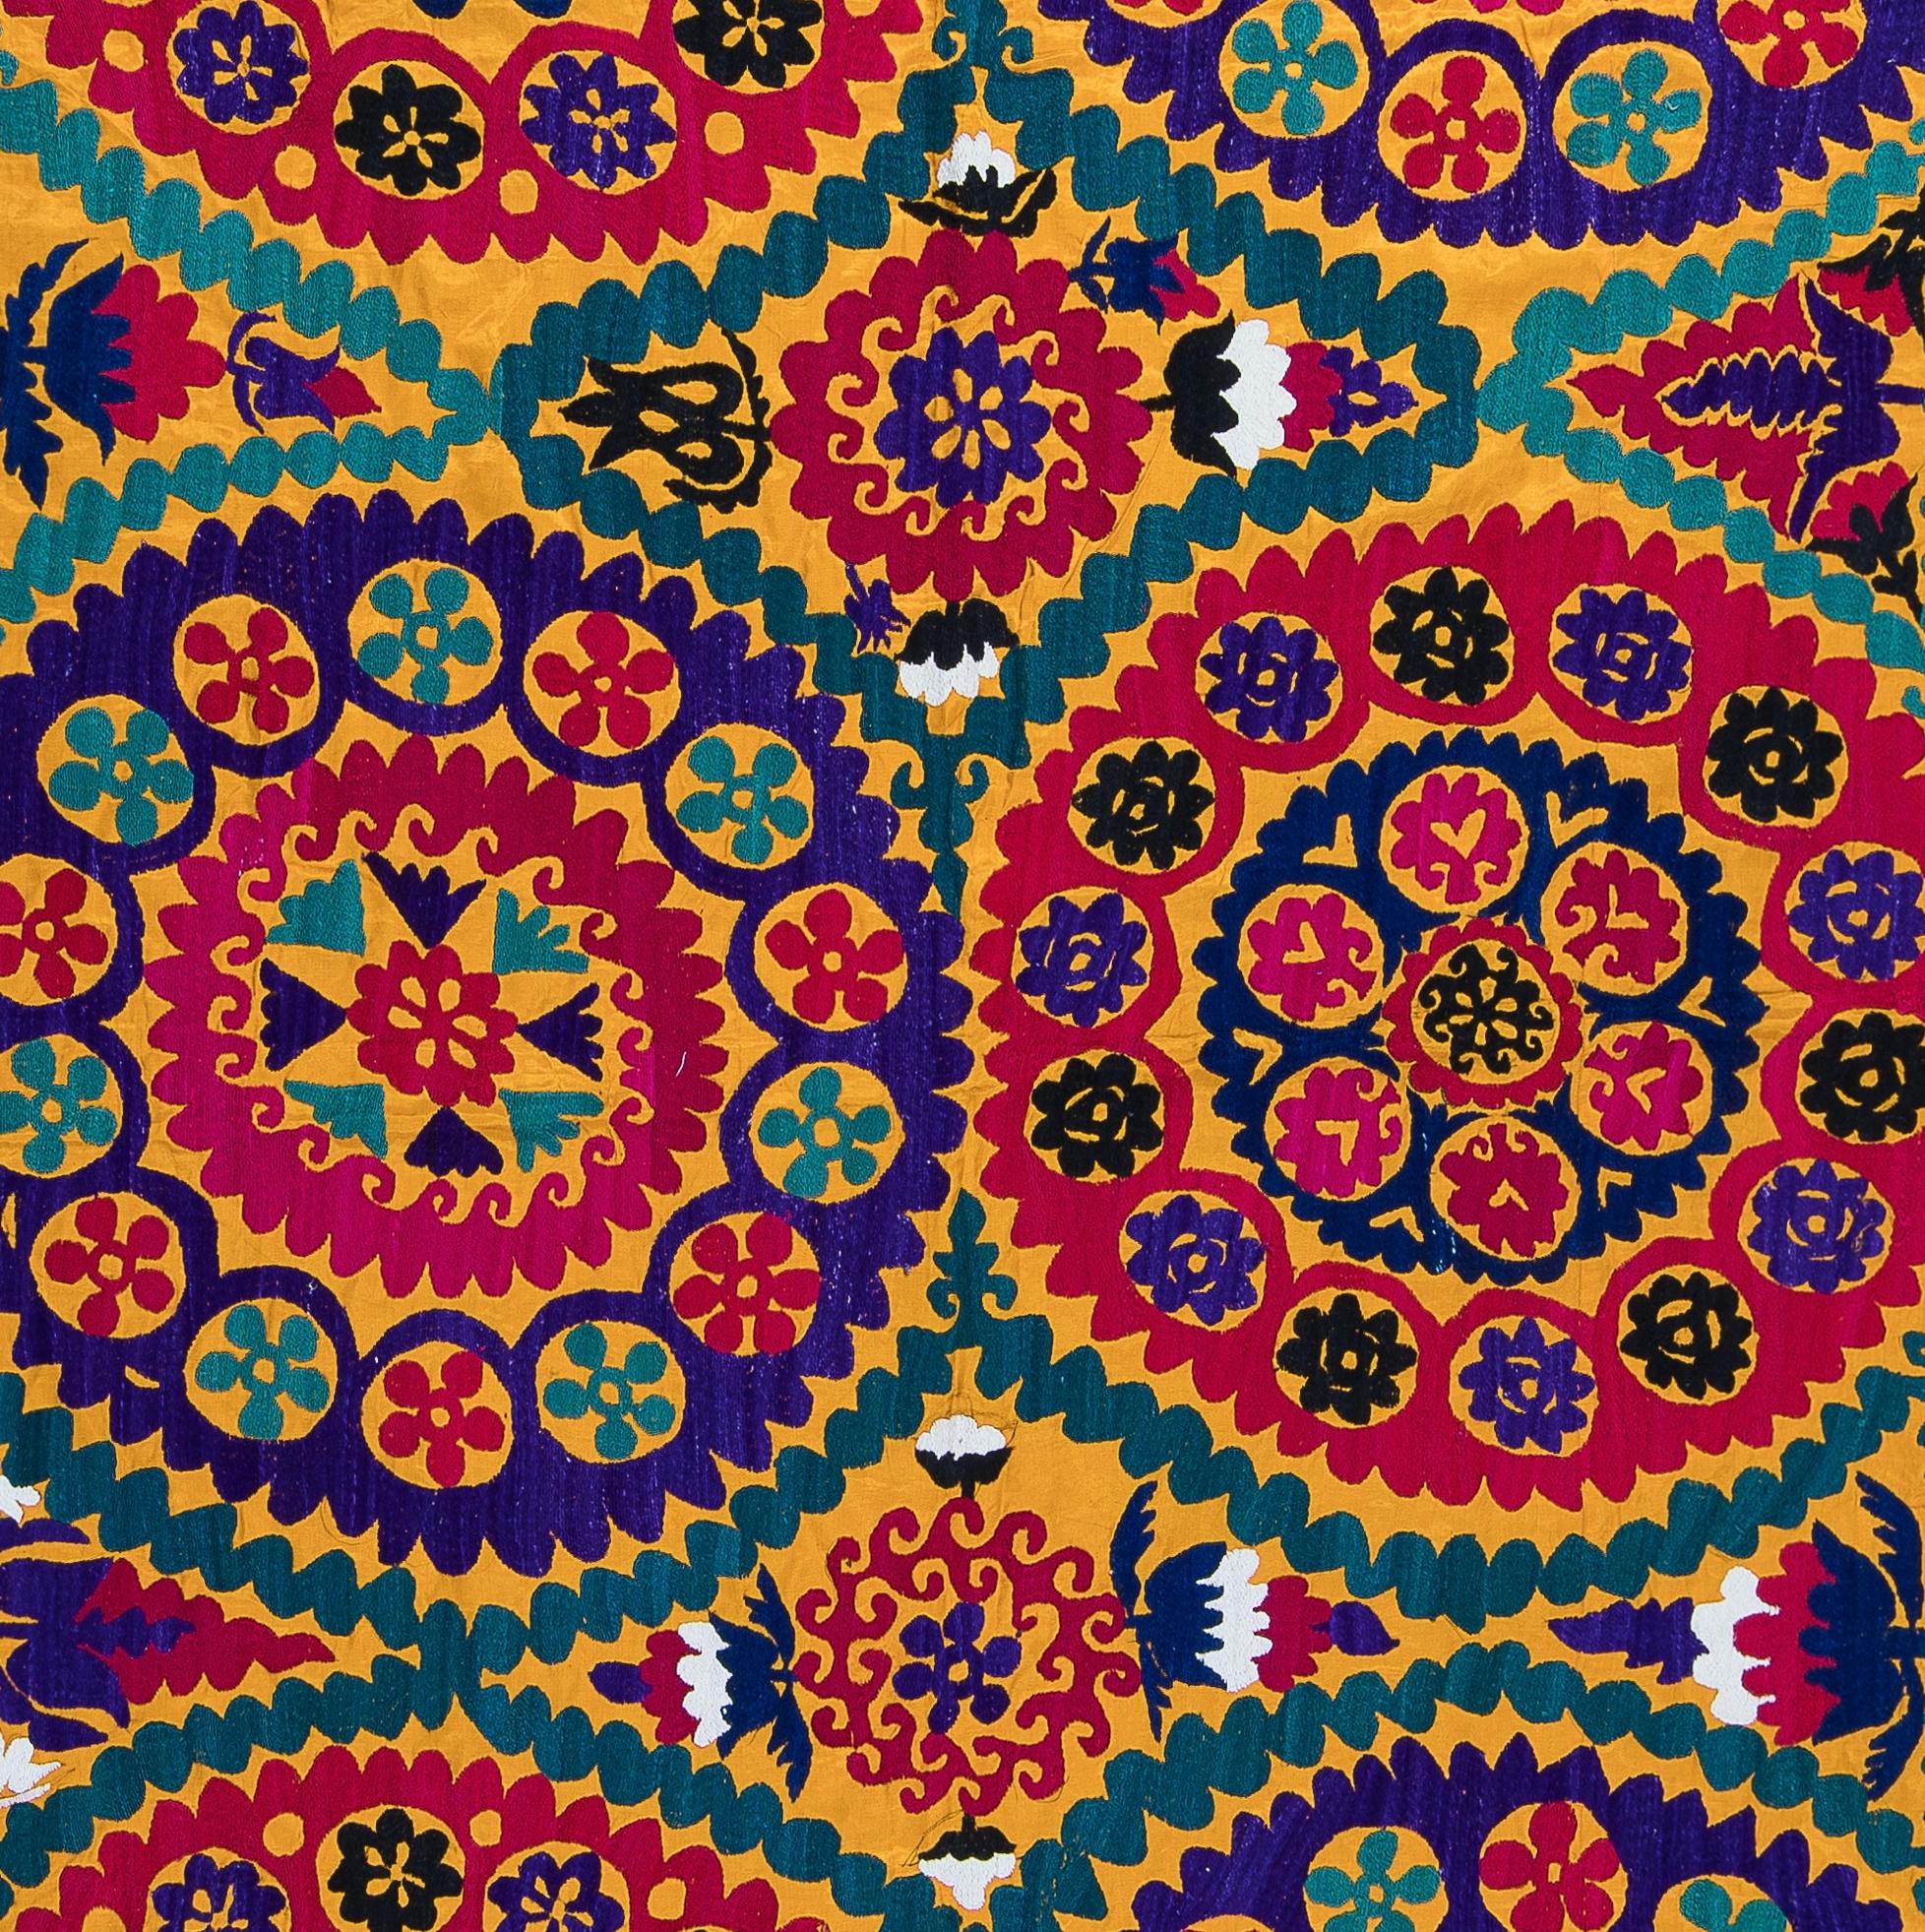 Uzbek Embroidered Cotton Bedspread, Vintage Tapestry, Multicolor Wall Hanging